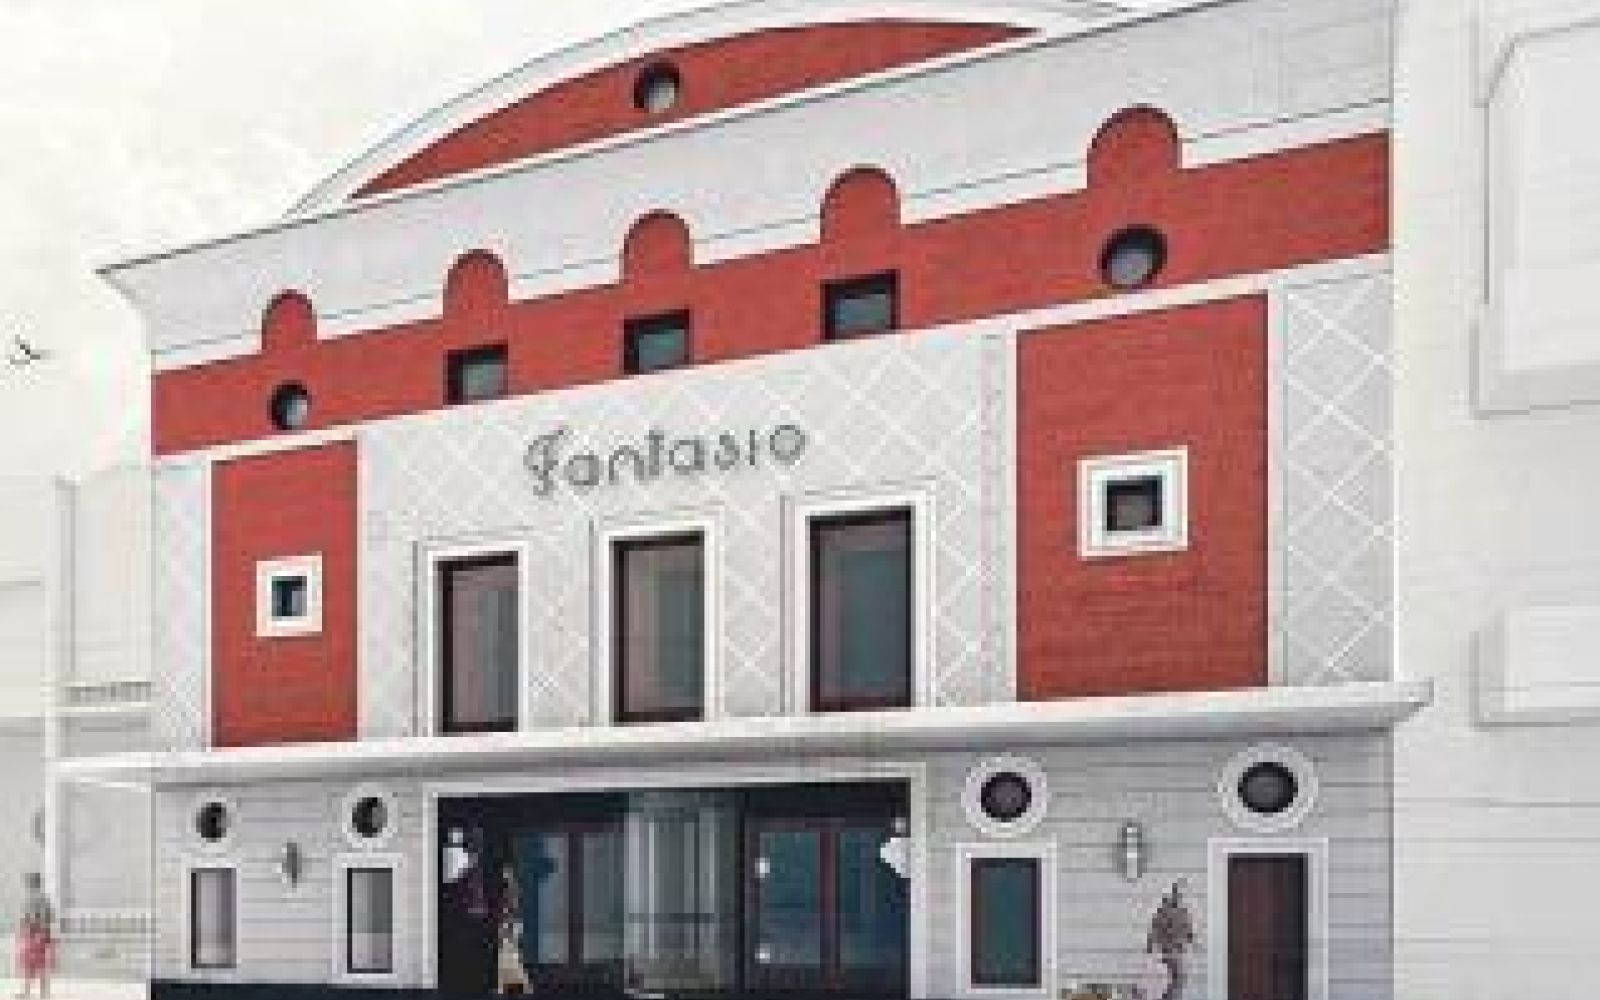 Teatro Cine Fantasio - Navia